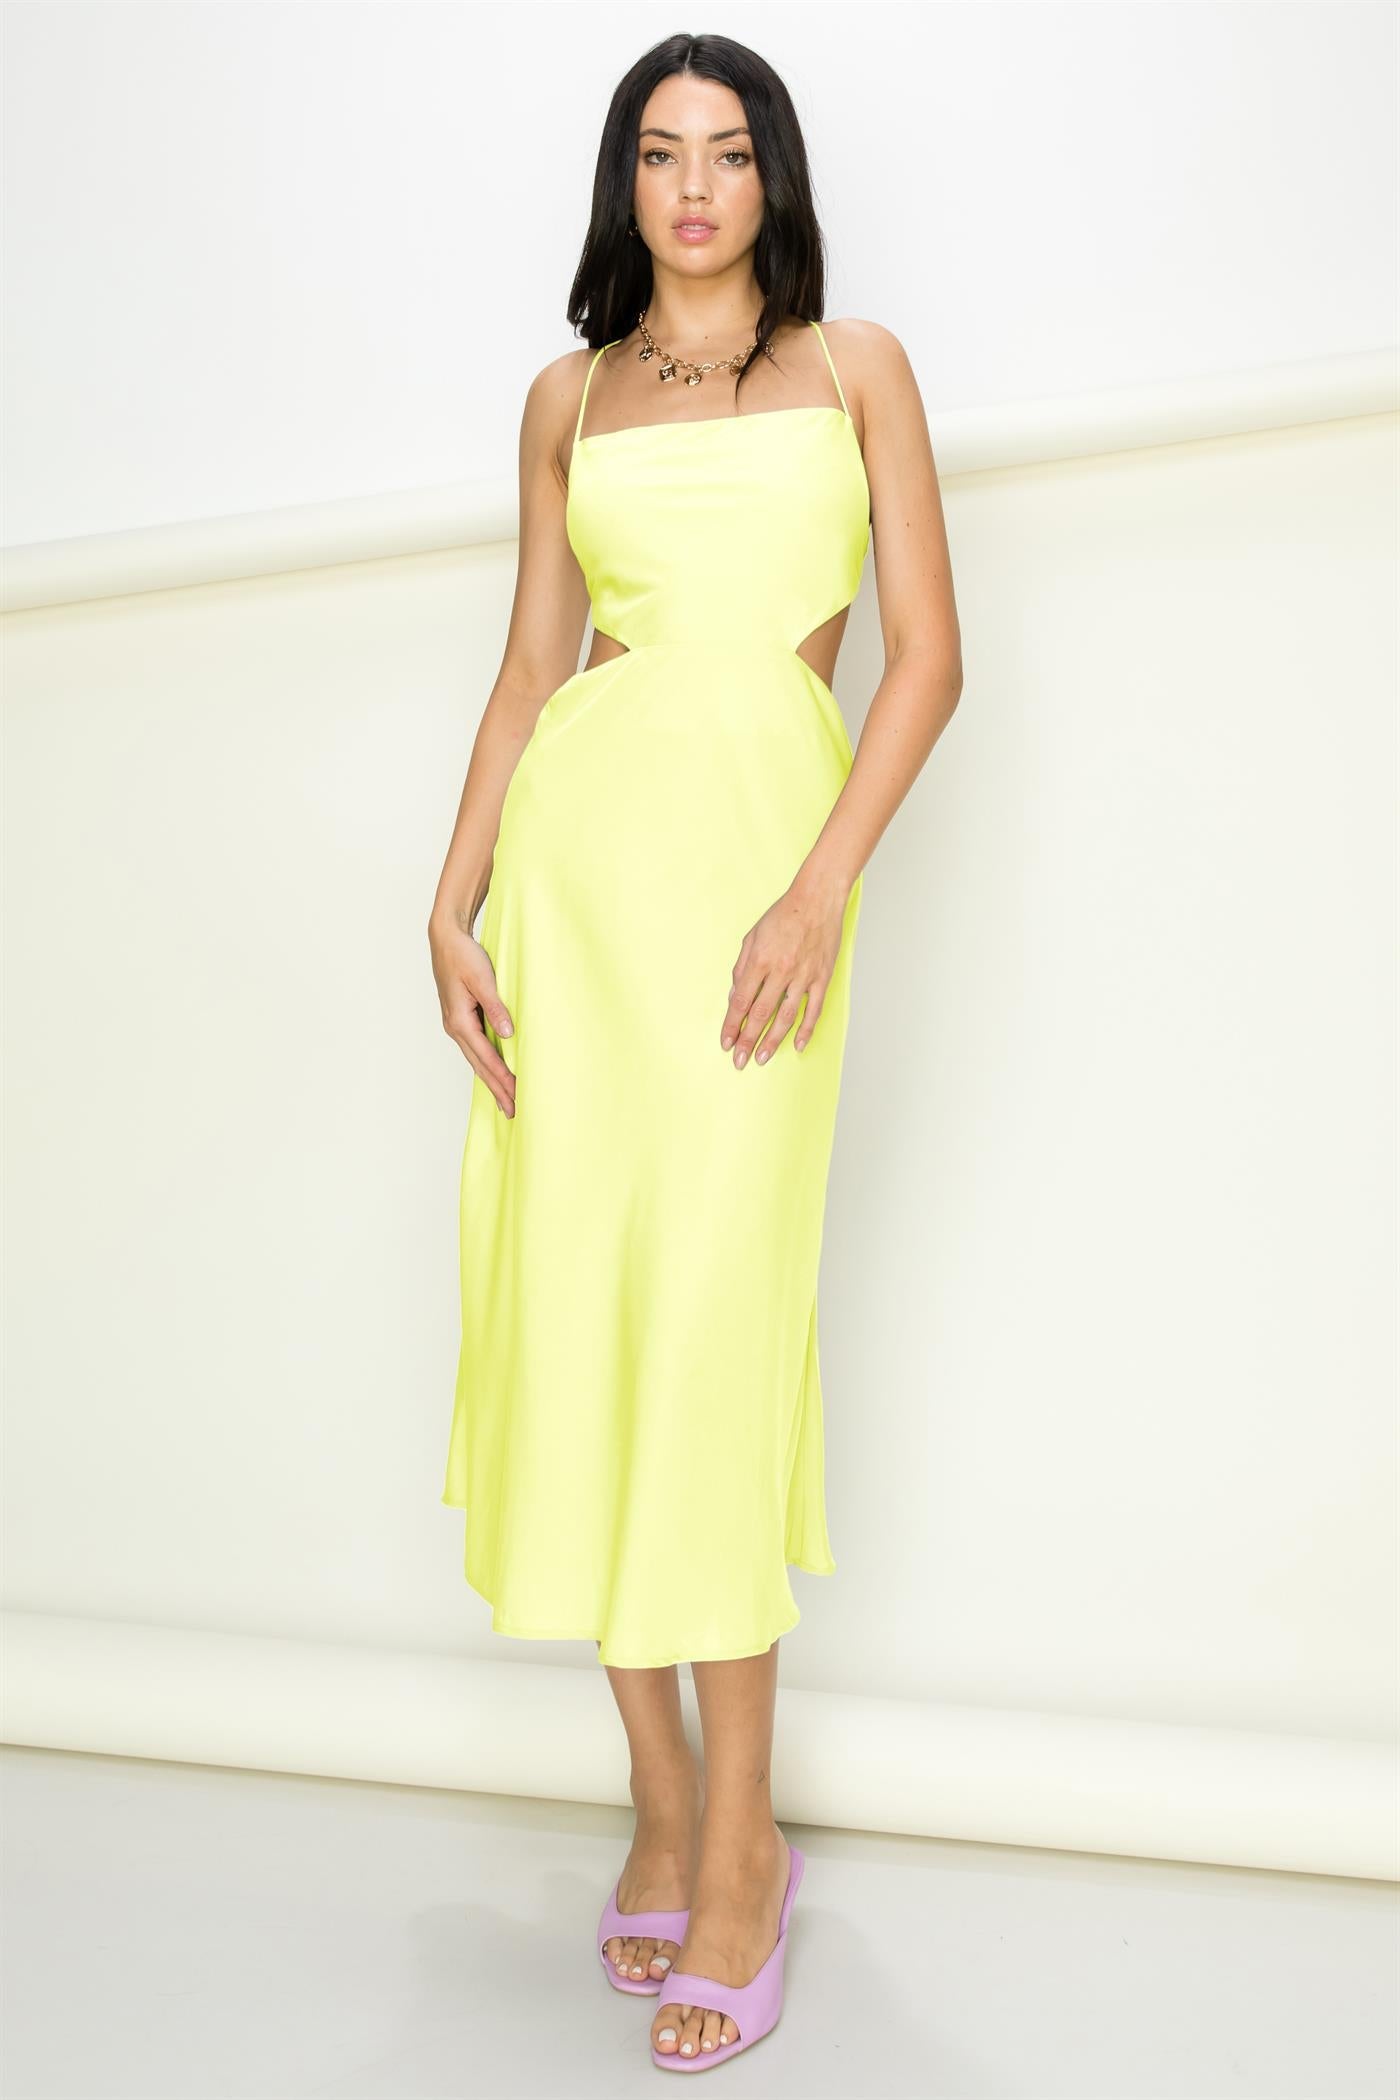 Aventura Clothing Women's Gabrielle Dress - Anthracite, Size